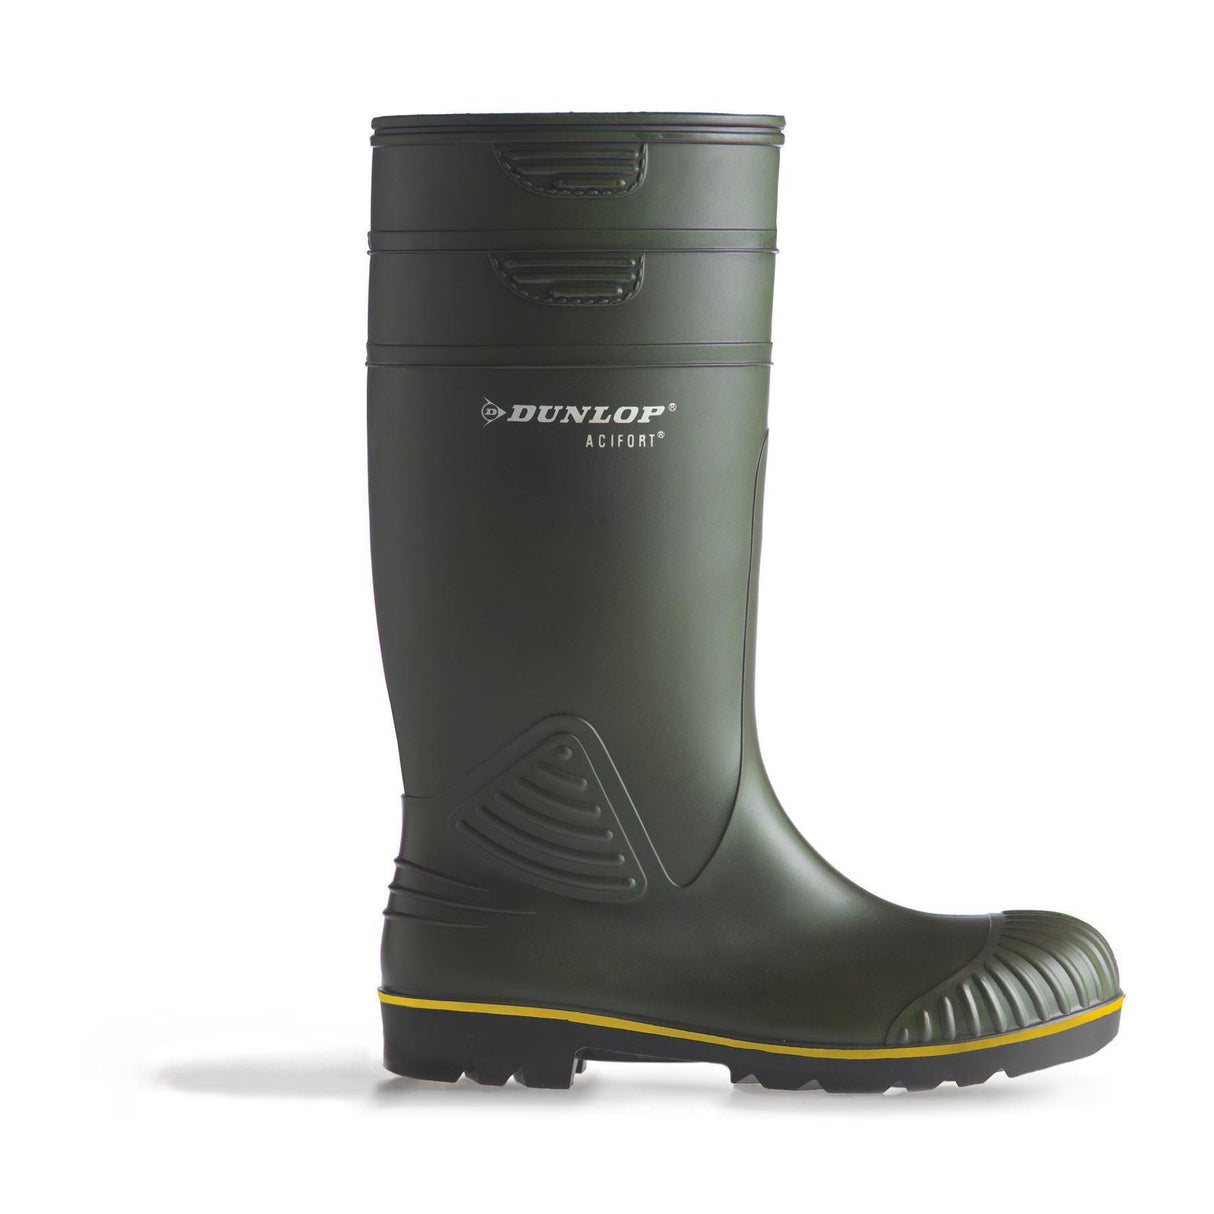 Dunlop Acifort Heavy Duty Wellington Boots